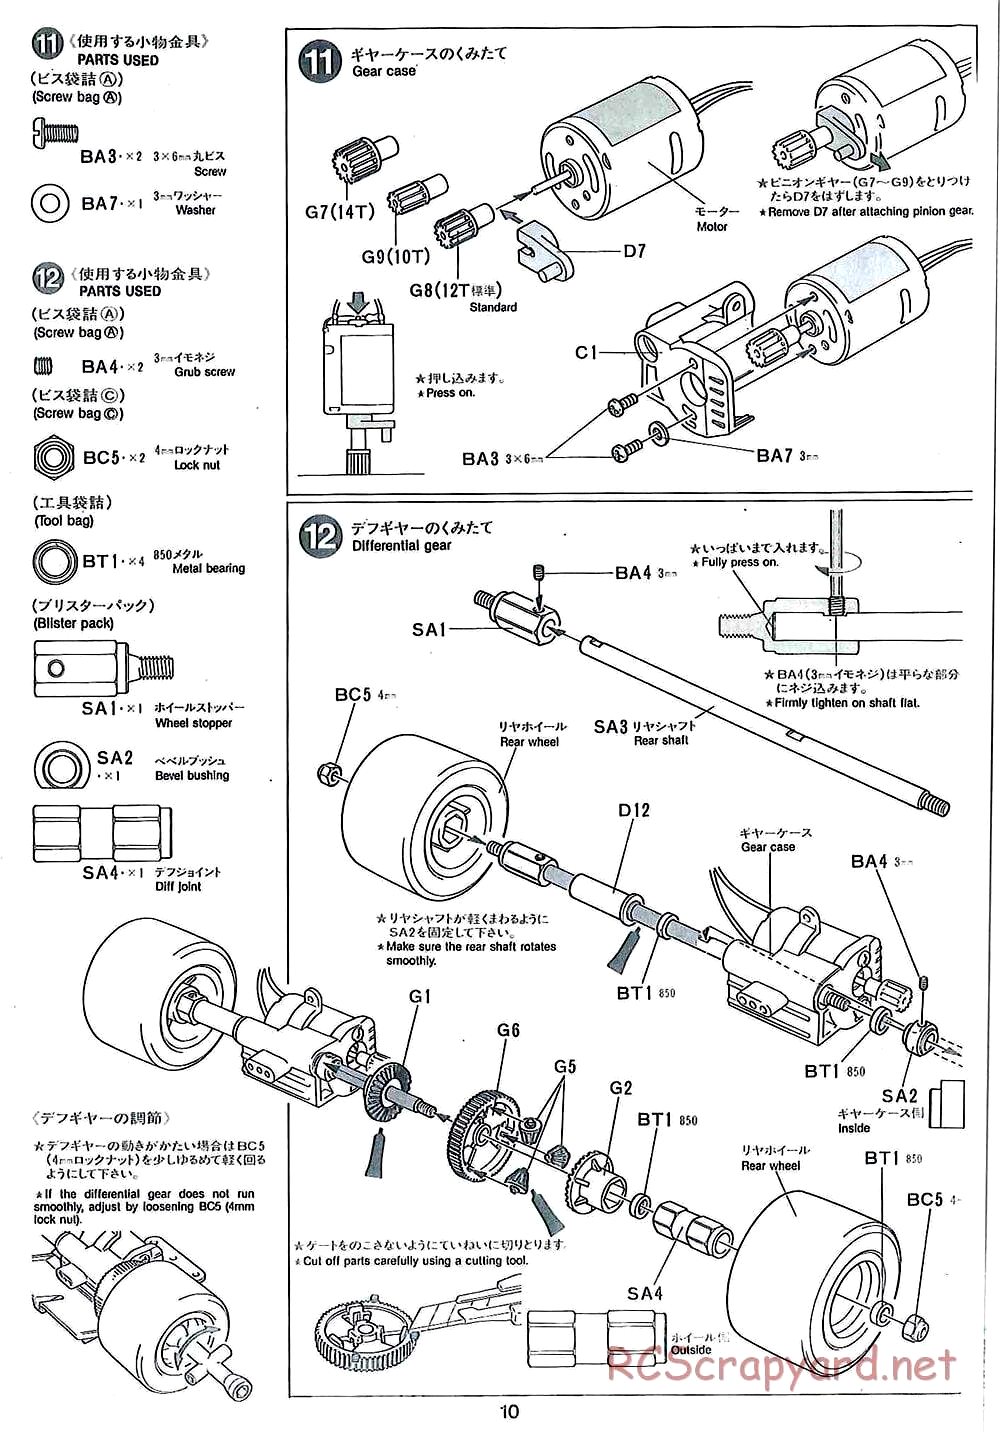 Tamiya - TamTech - F1 Chassis - Manual - Page 10